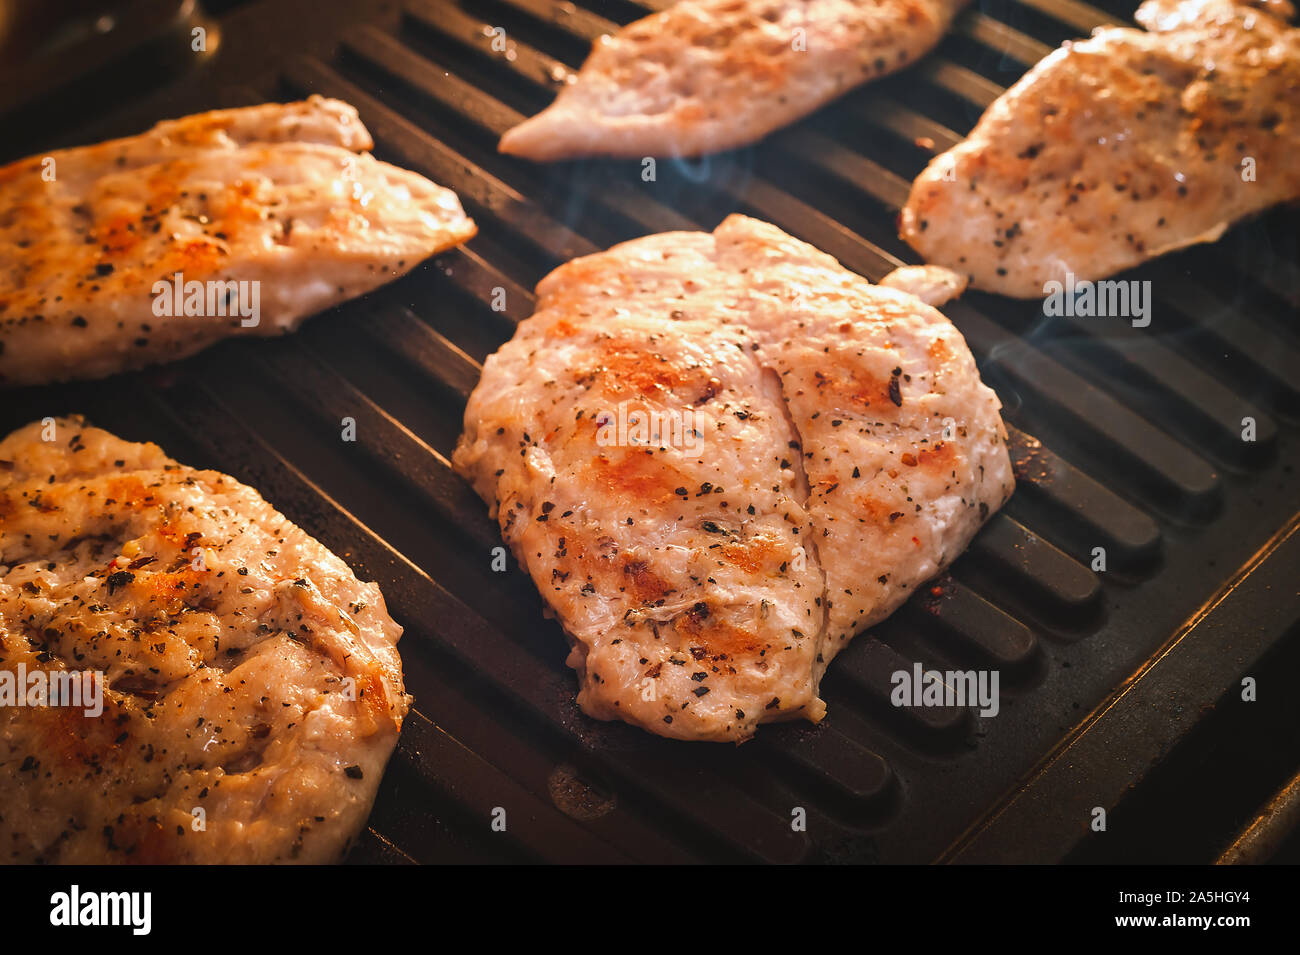 Fumante asar filetes de carne de pollo o pavo condimentado con especias en parrilla eléctrica placa. Foto de stock